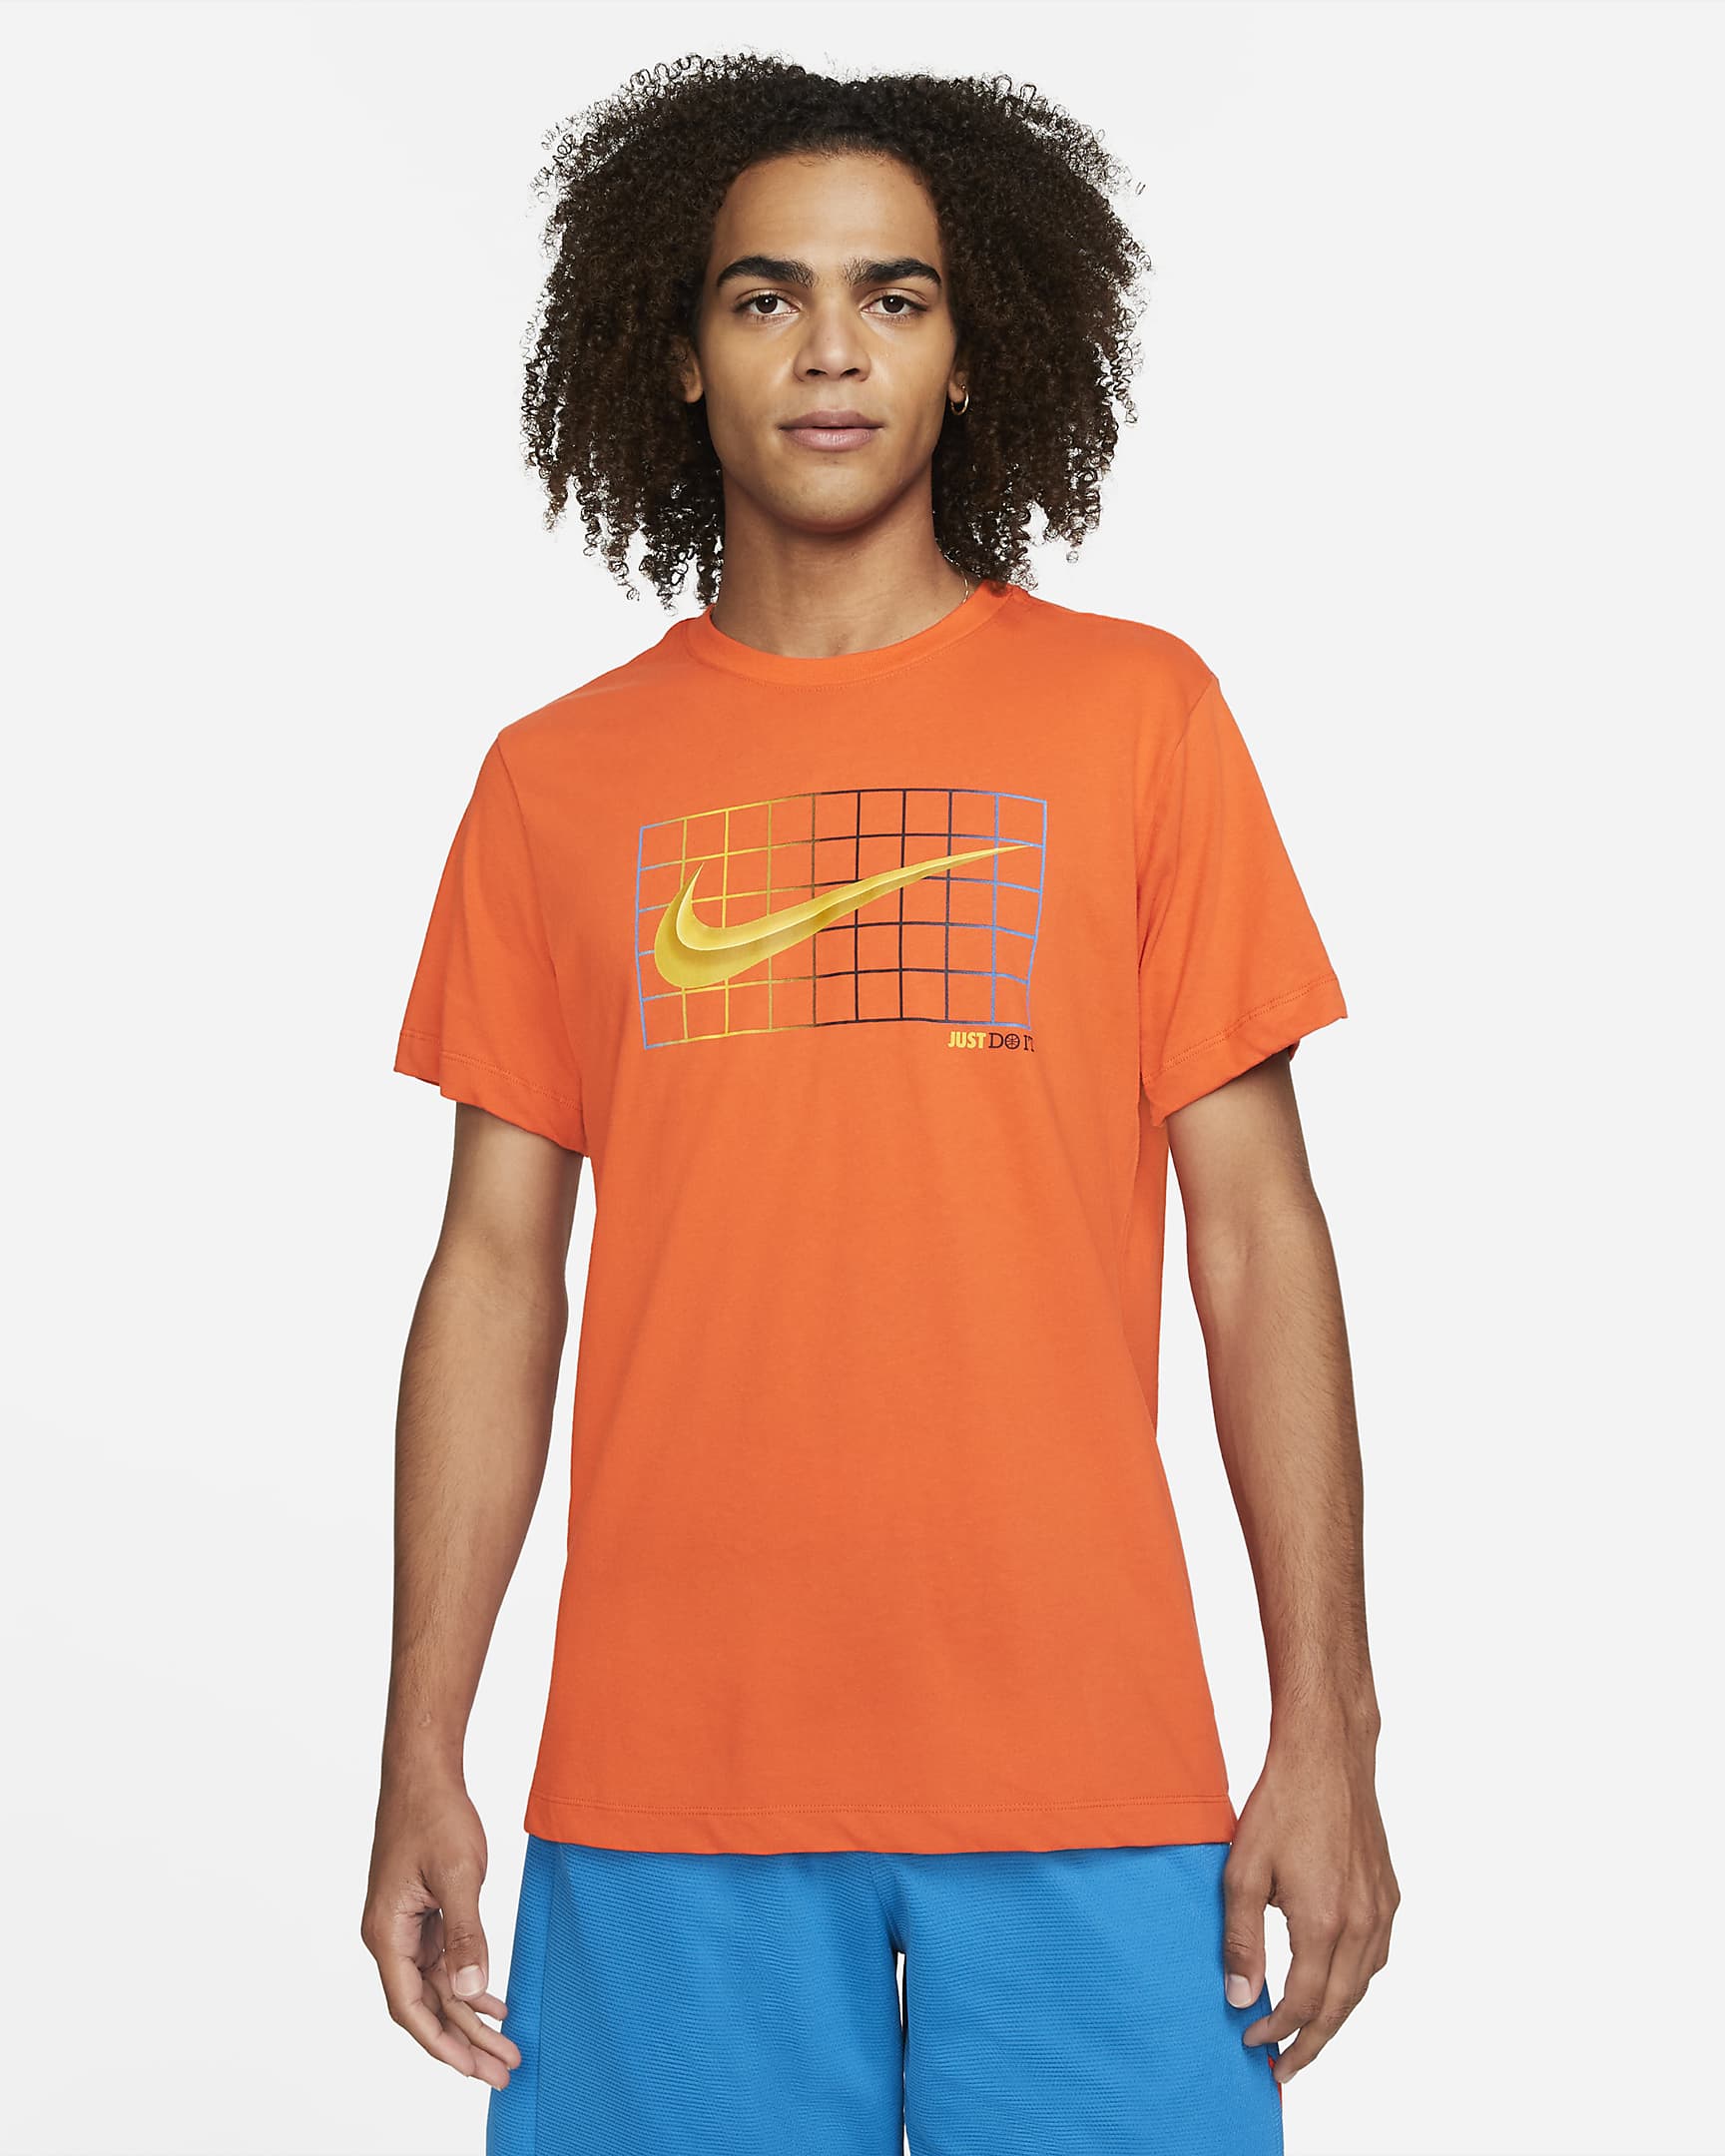 nike-dri-fit-just-do-it-mens-basketball-t-shirt-pDNB95.png